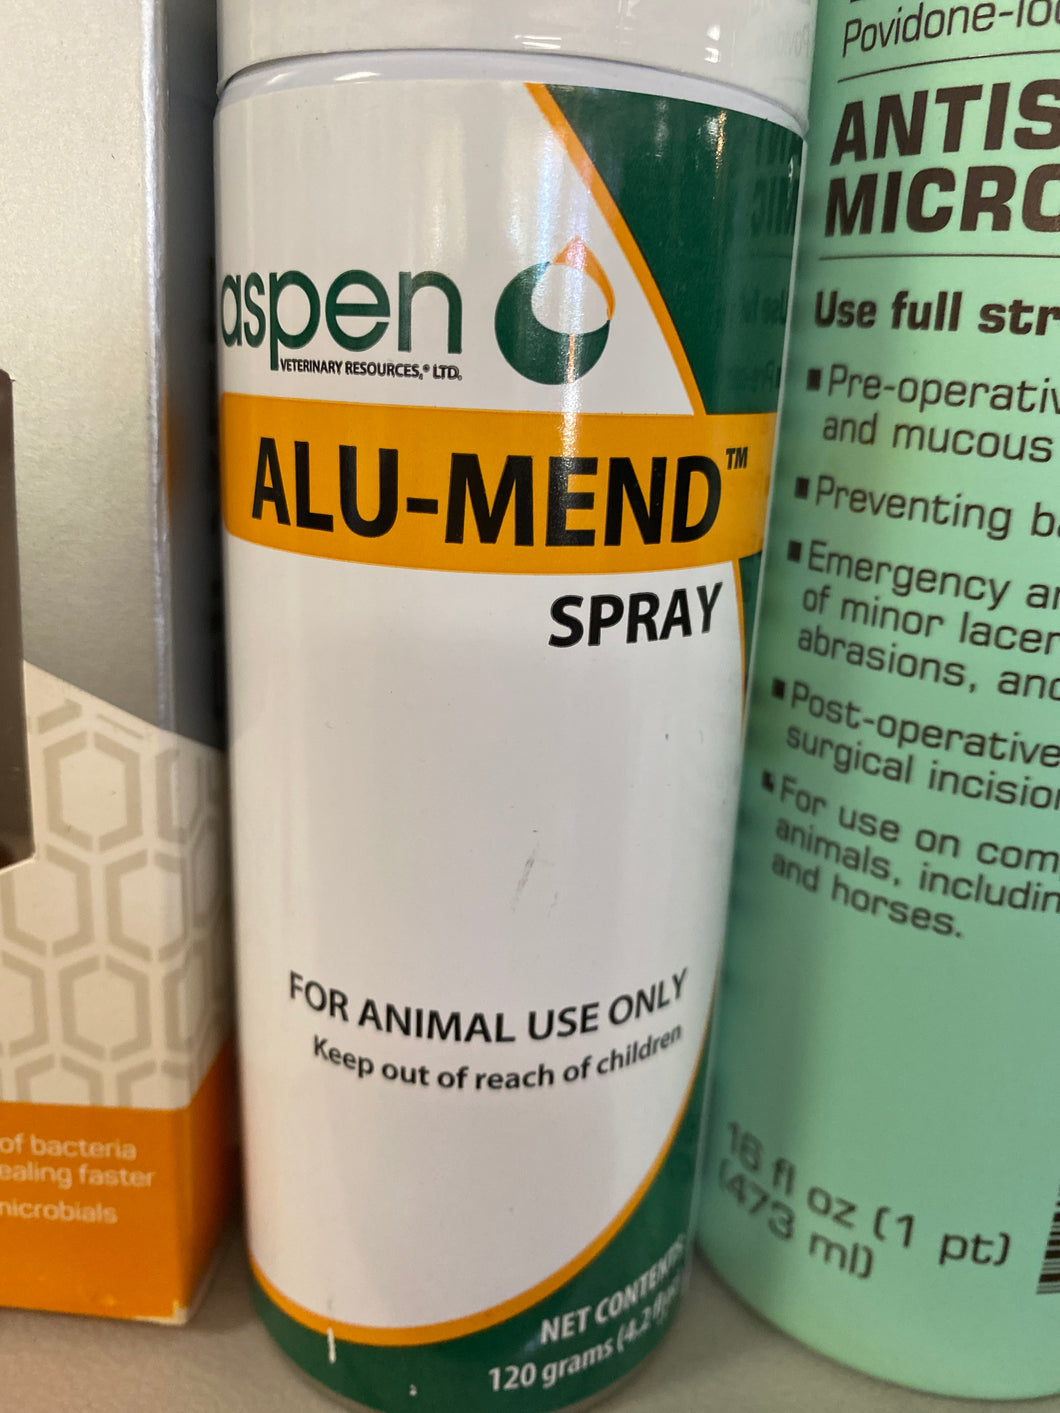 Aspen ALU-MEND Spray On Bandage